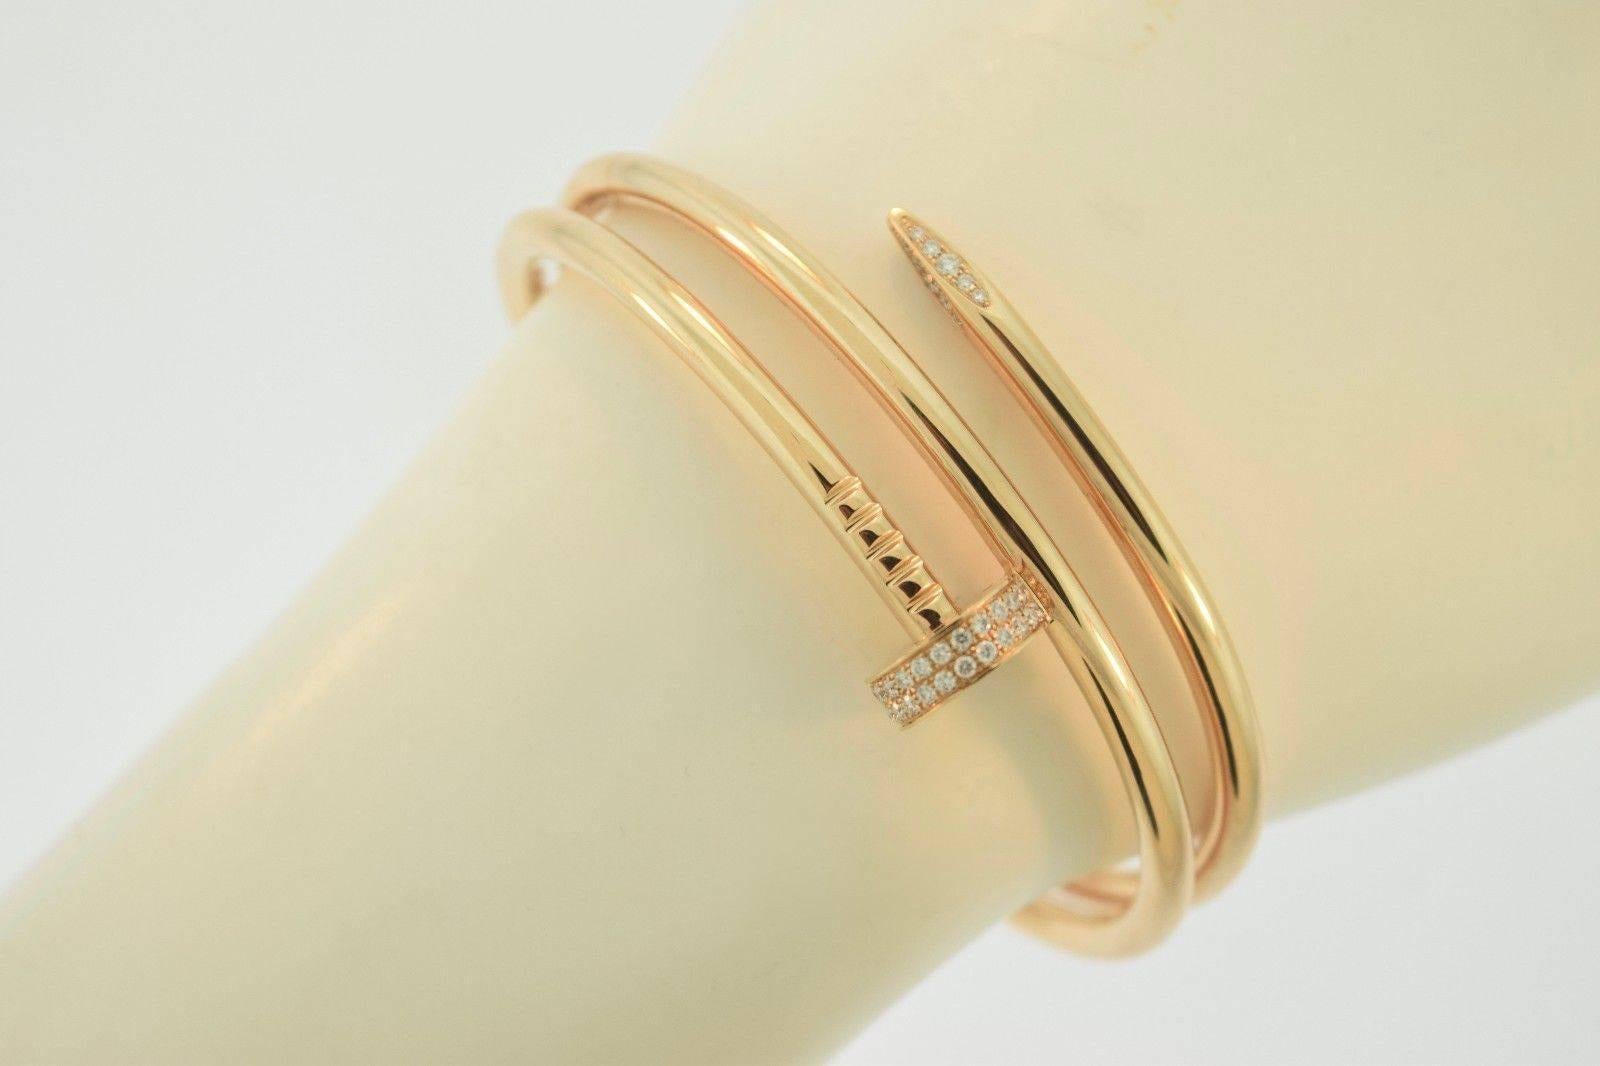  Cartier Juste Un Clou 18k Rose Gold Bracelet with Diamonds, Size 18 1